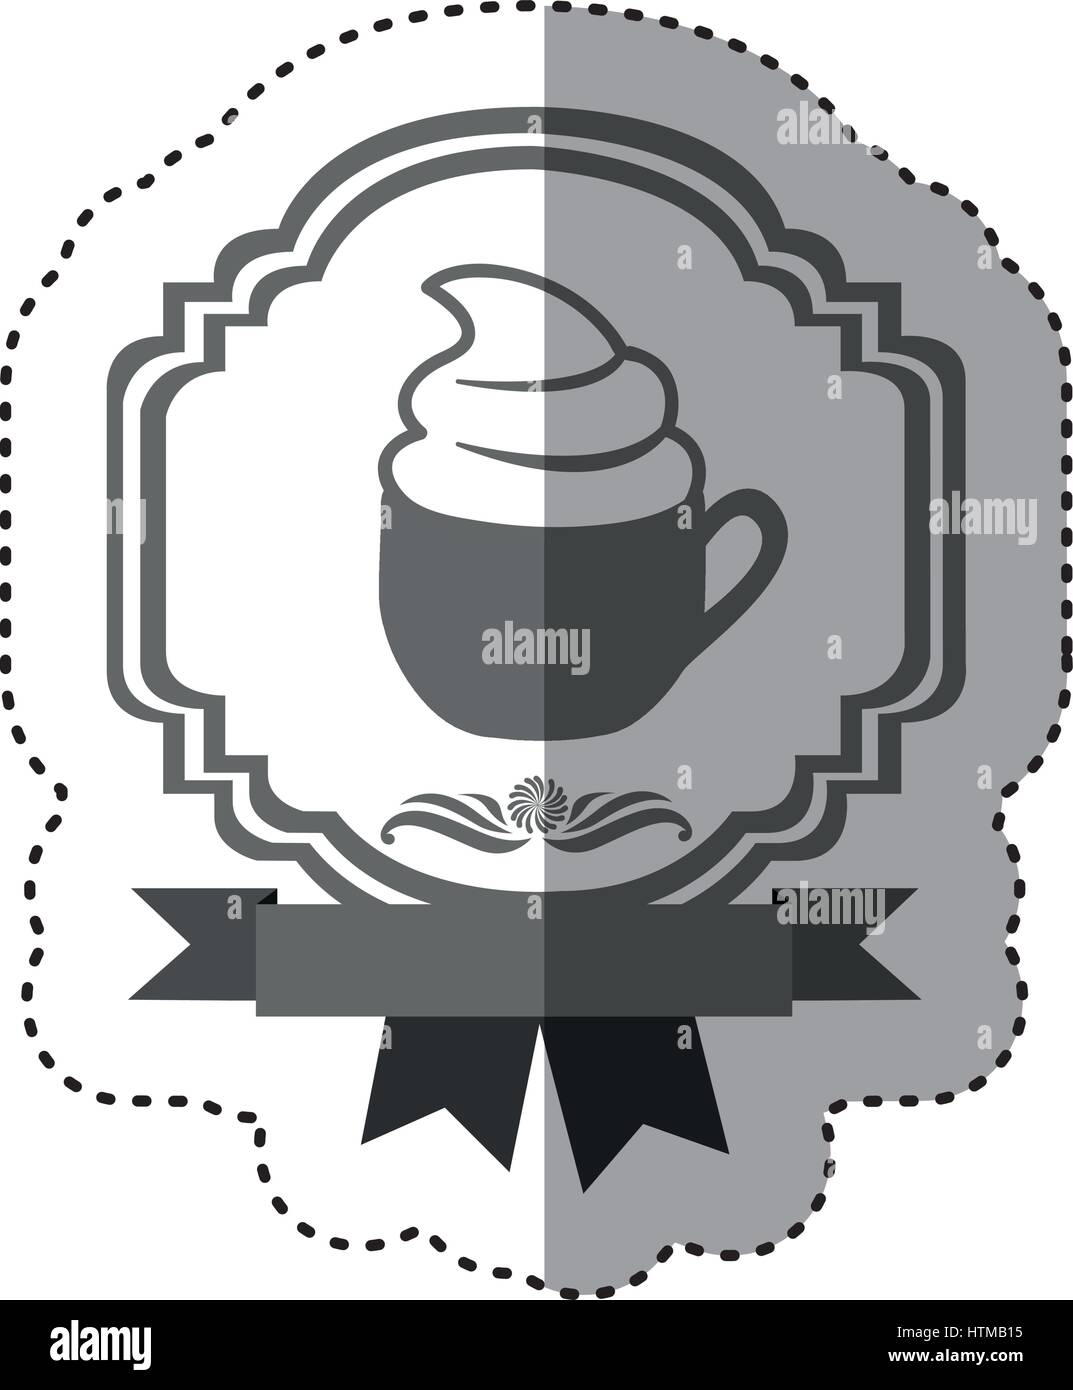 sticker gray scale border heraldic decorative ribbon with cup of cappuccino with cream Stock Vector